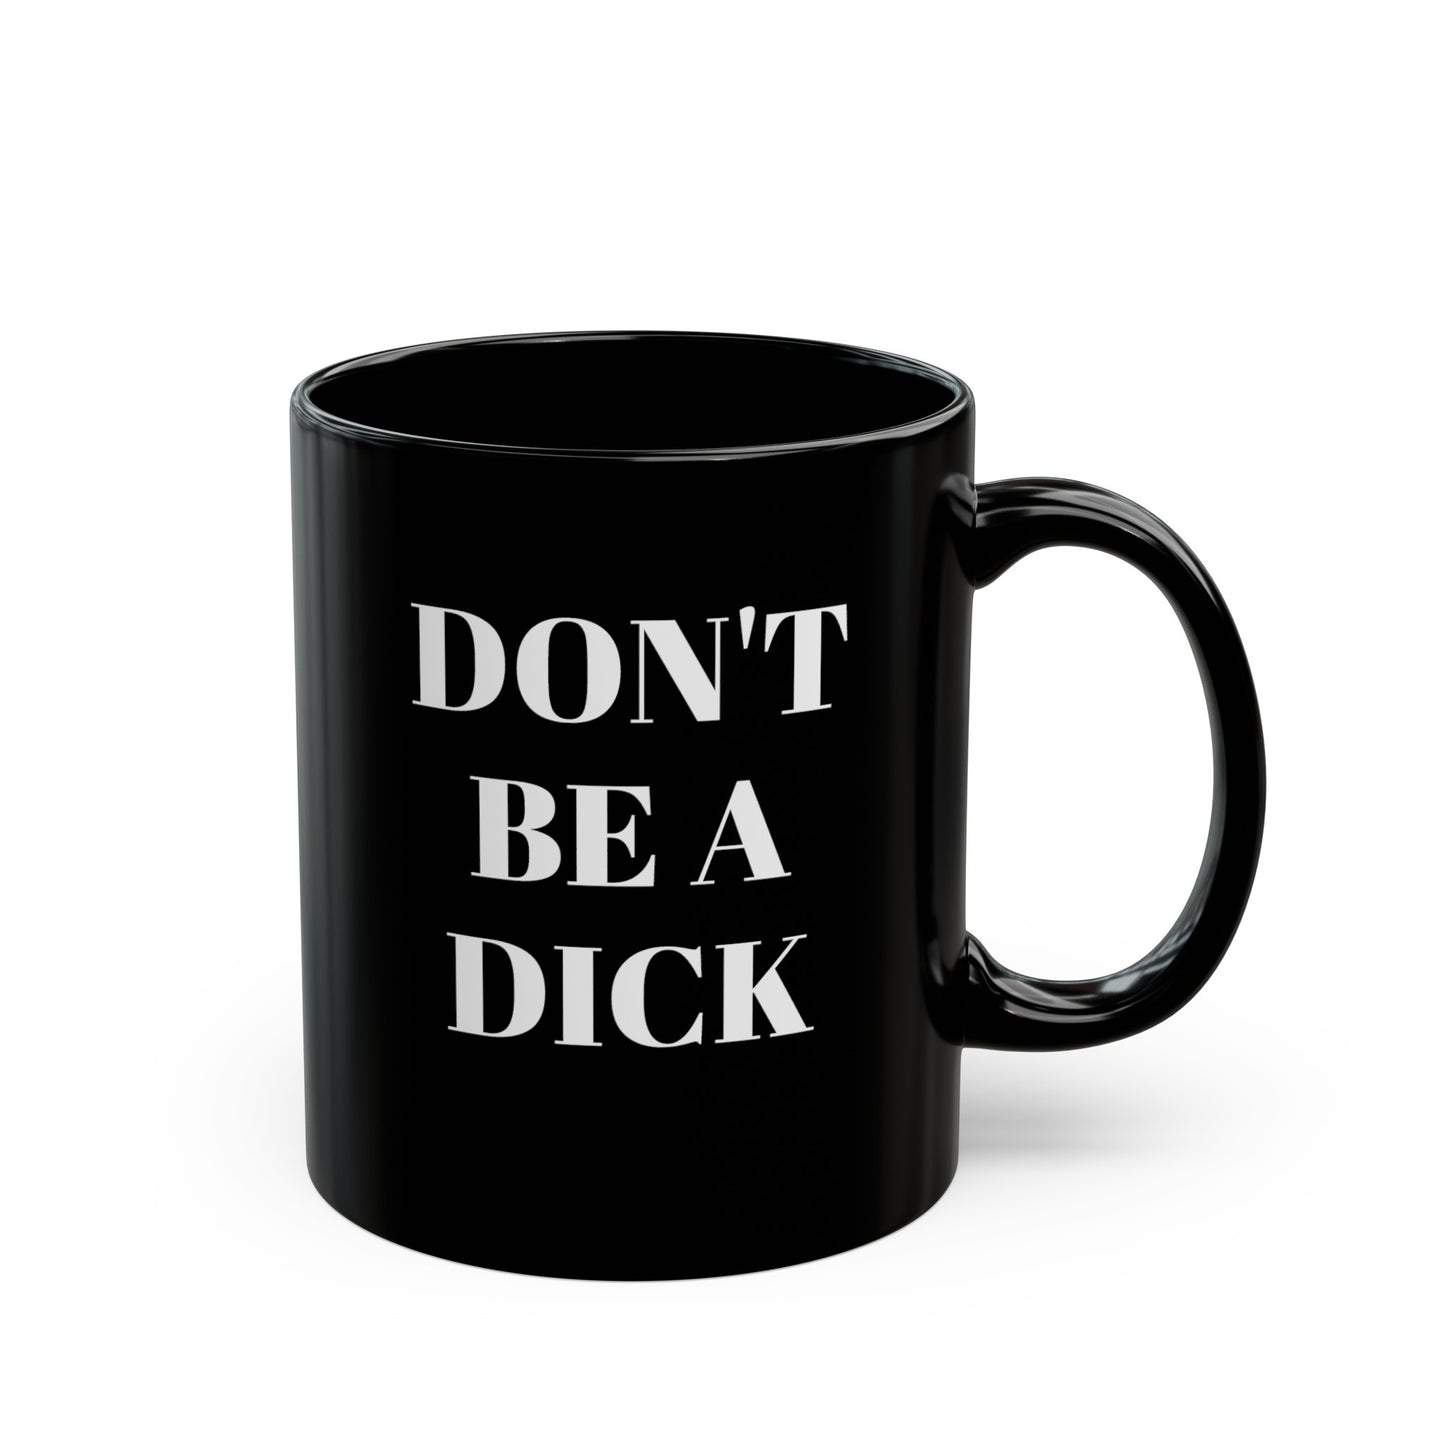 DONT BE A DICK - Black Mug (11oz)